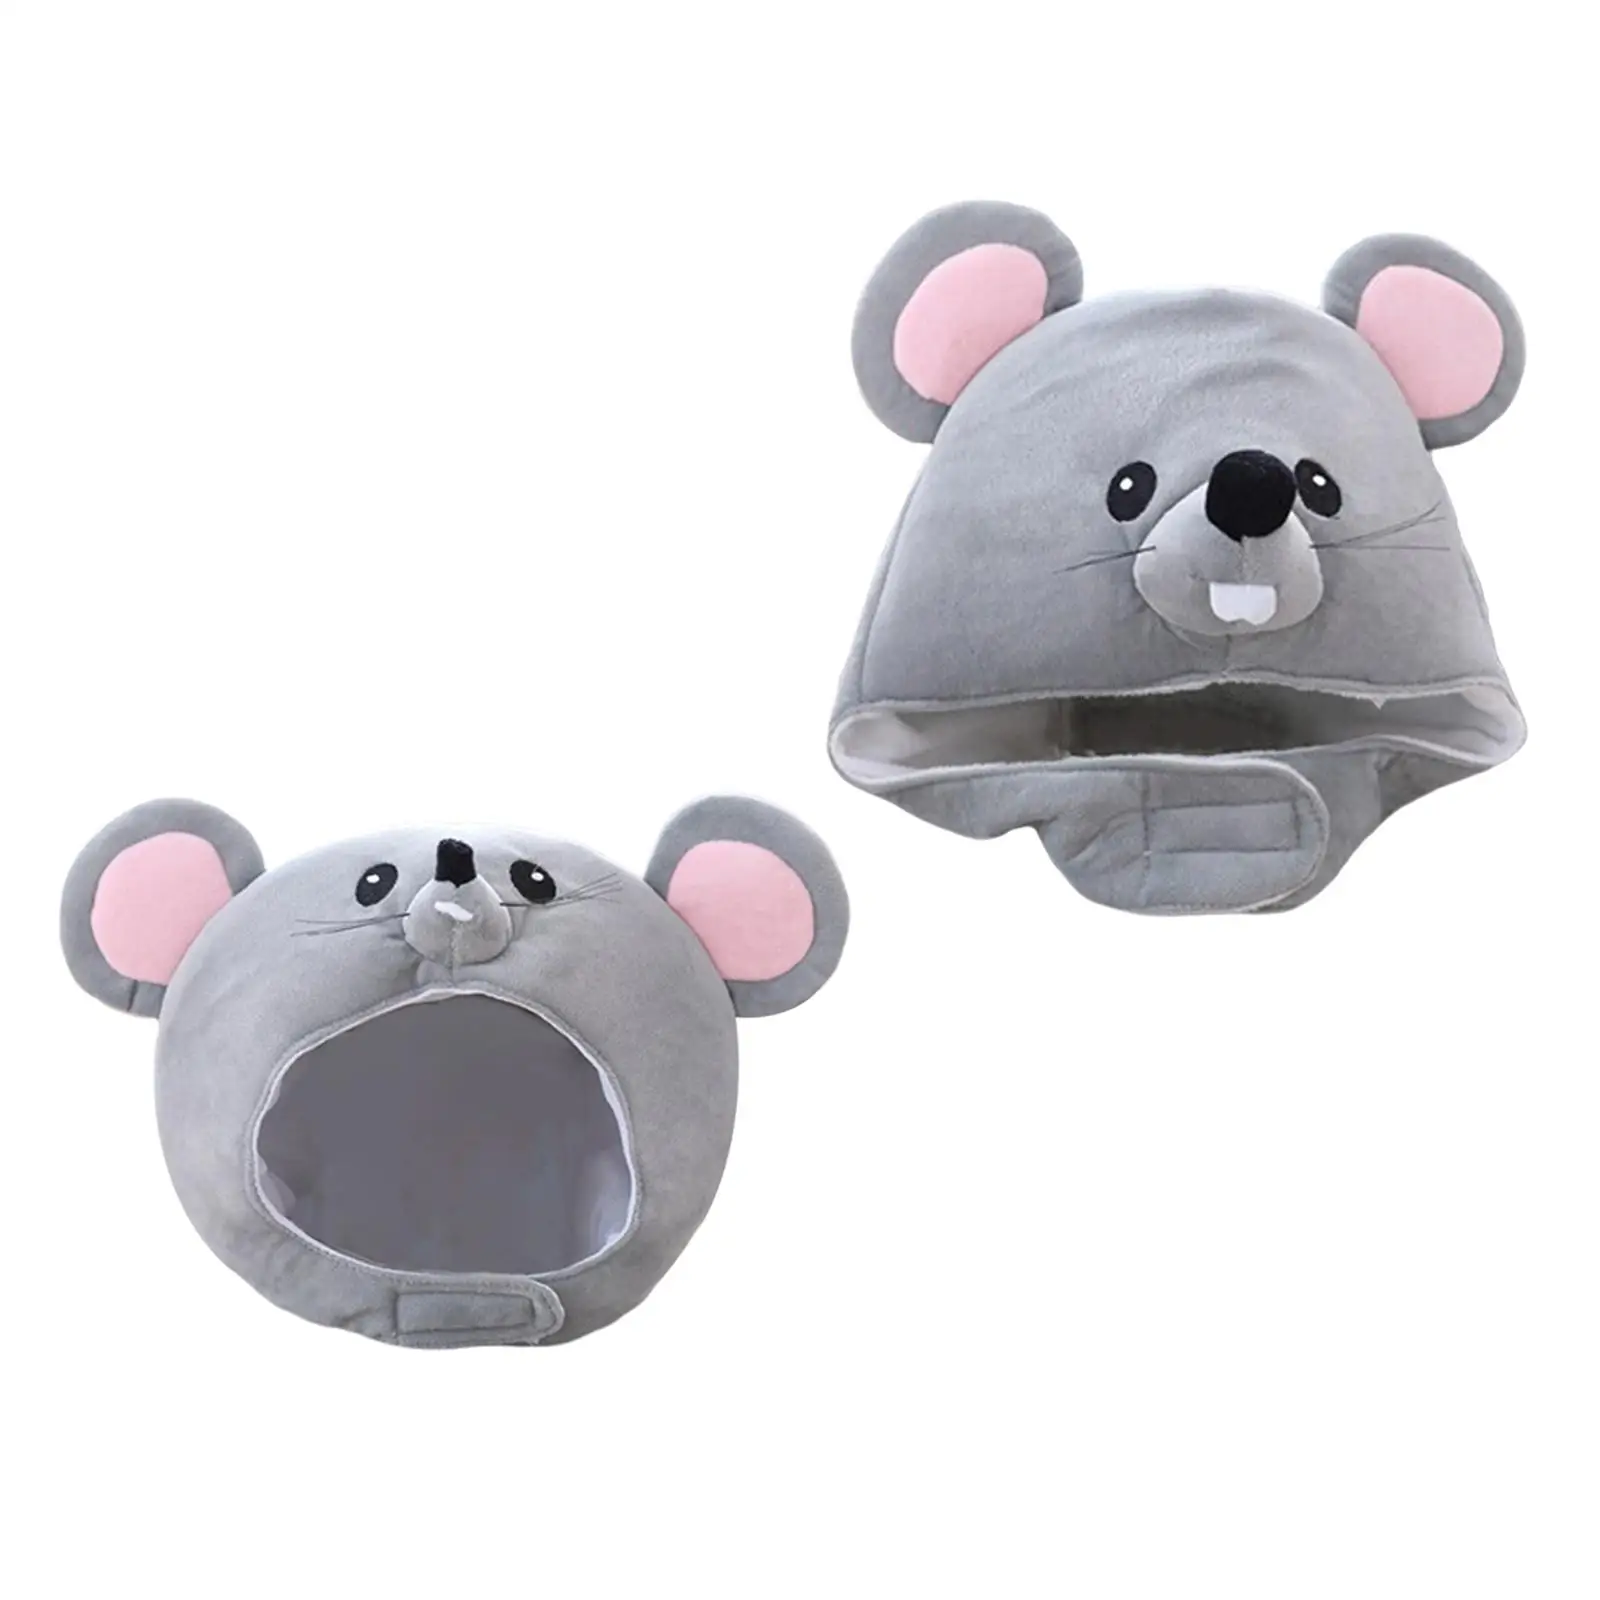 Animal Mouse Headgear Kids Gifts Warm for Cosplay Fancy Dress Selfie Accessories